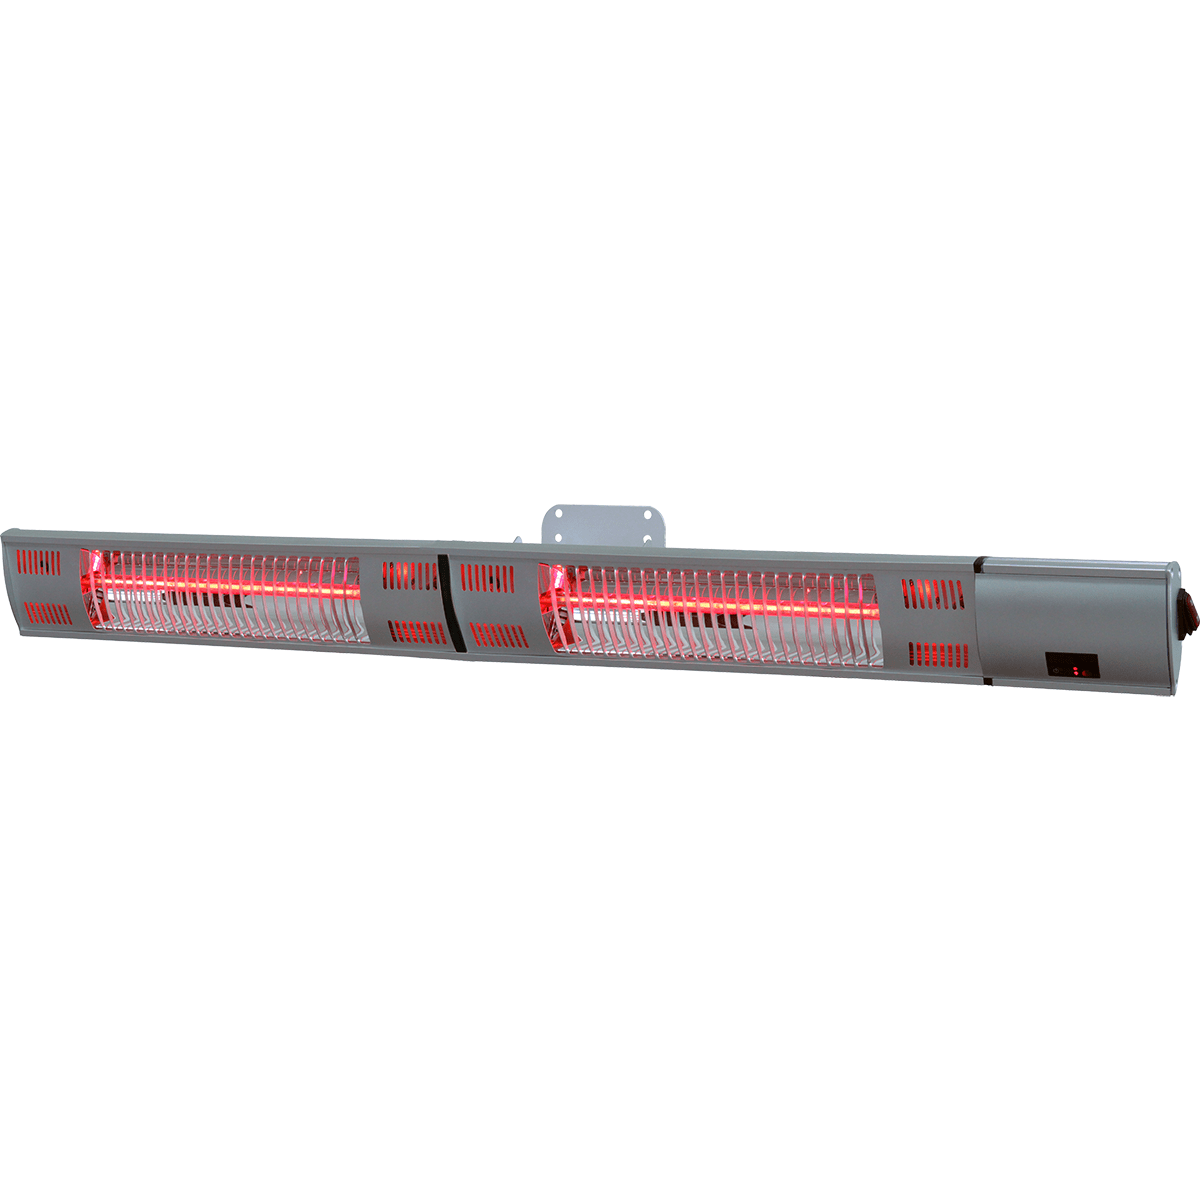 Ener-G+ 3000 Watt Wall Mounted Infrared Outdoor Heater